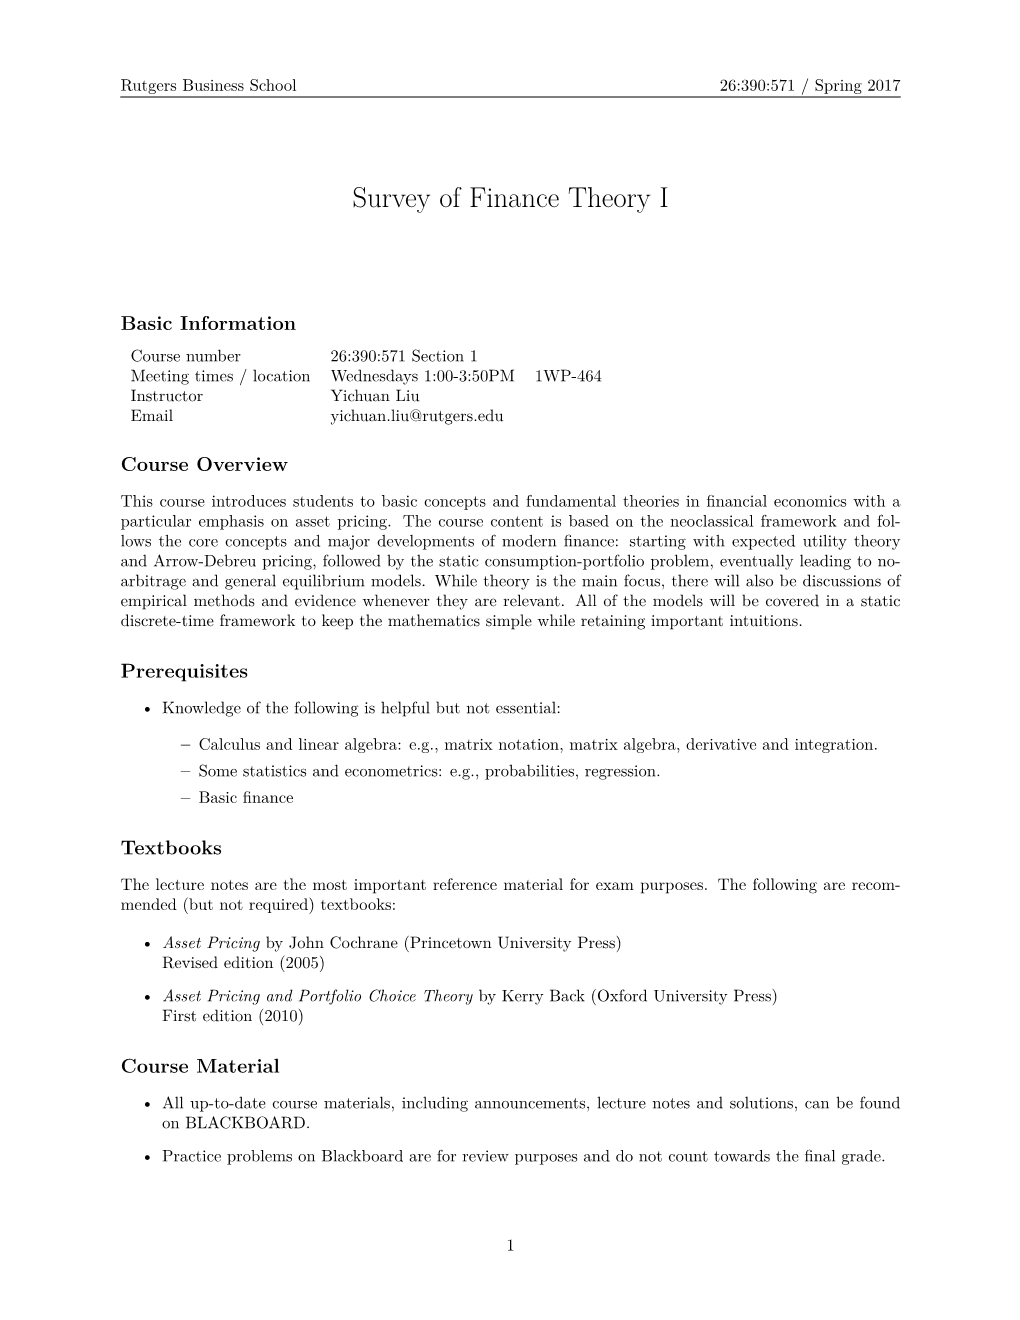 Survey of Finance Theory I